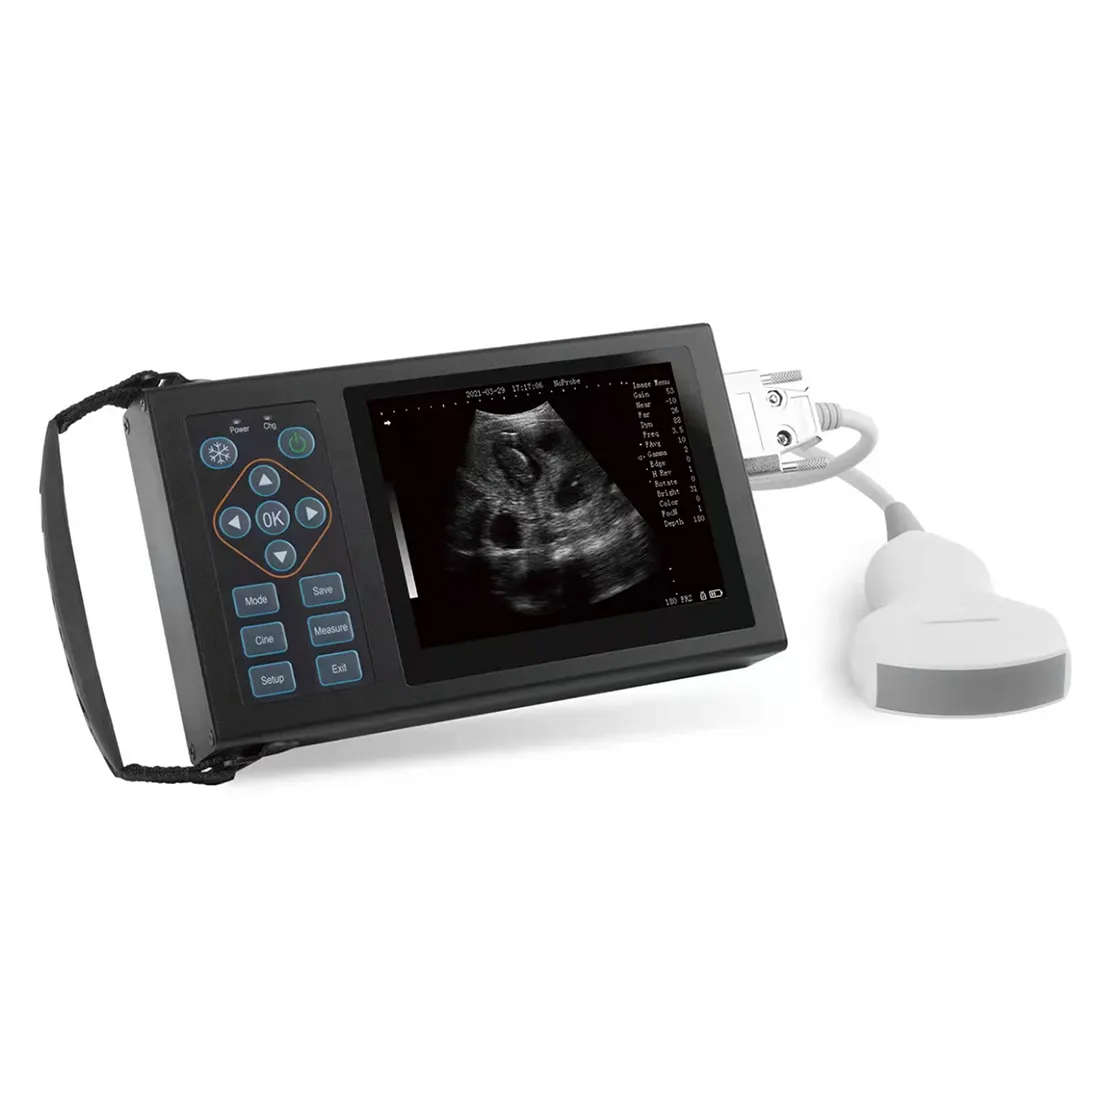 Vetsmart ferramenta de ultrassom veterinária, fácil de operar, máquina portátil de ultrassom